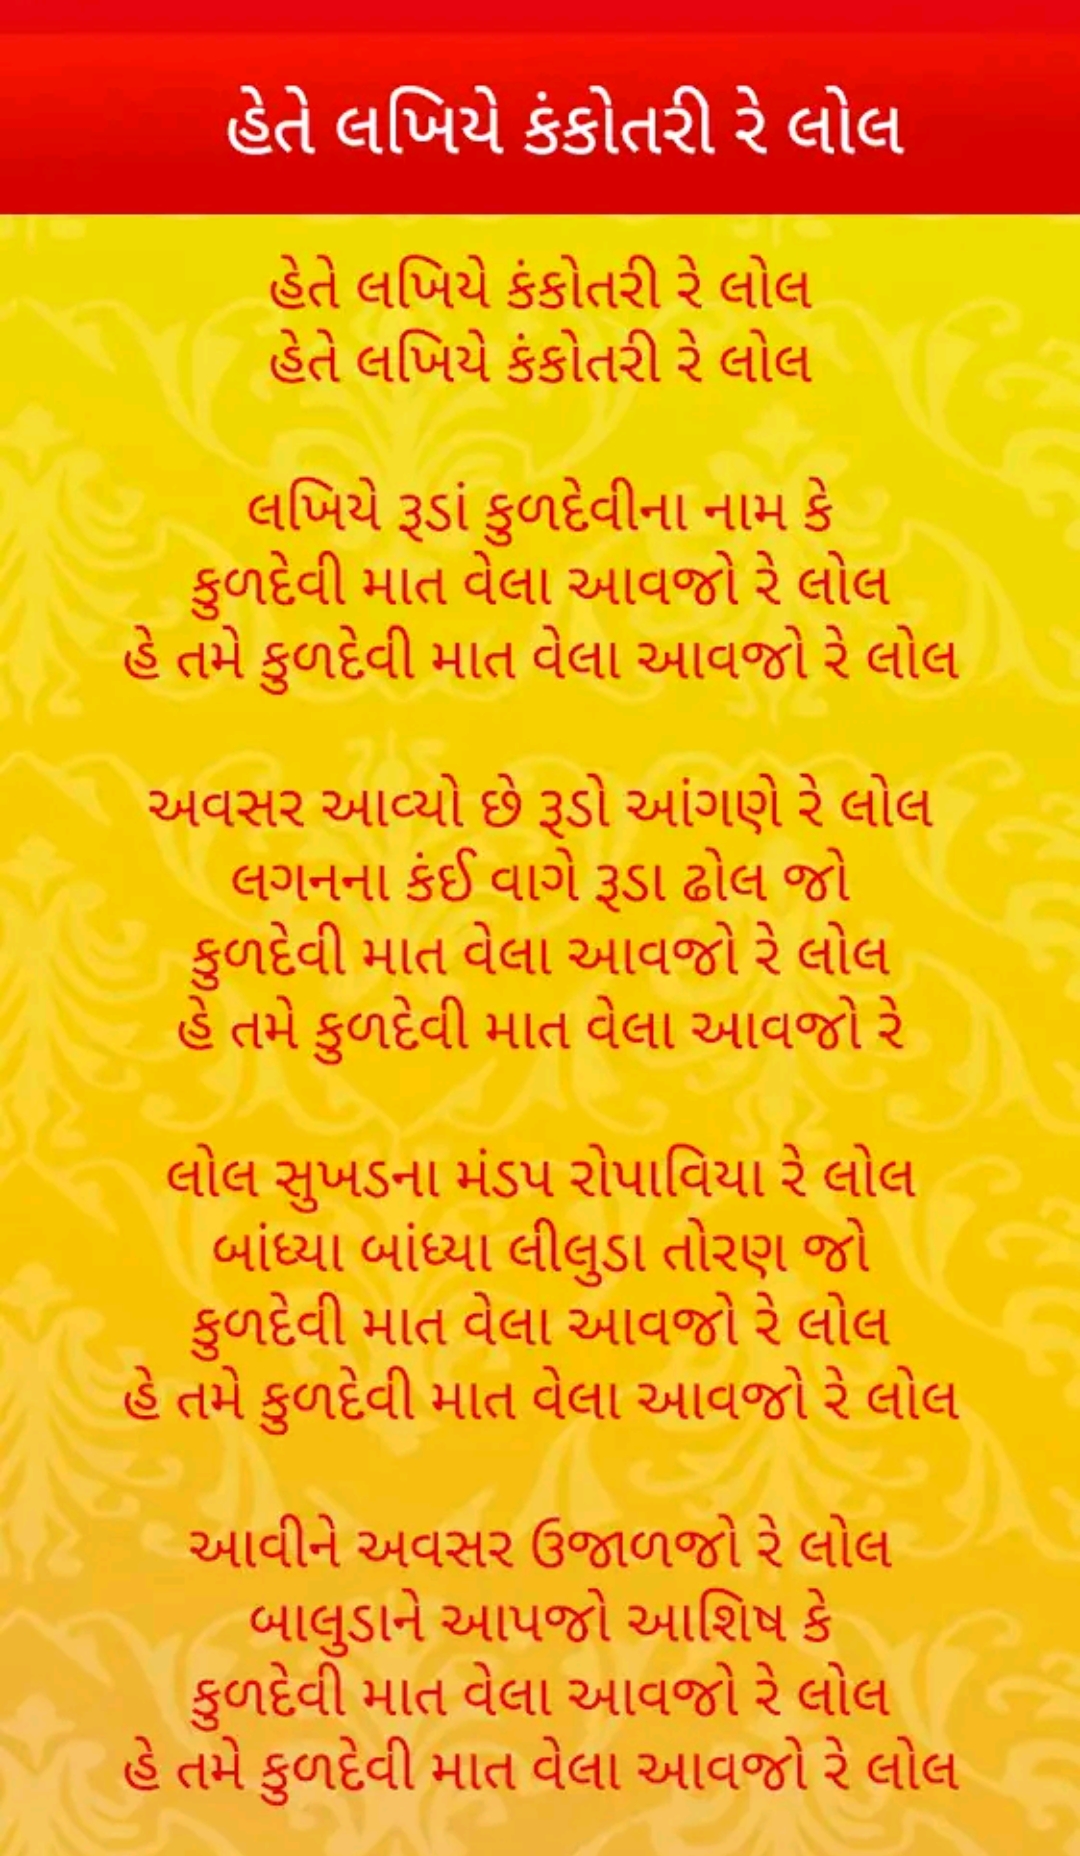 Anjali geet in gujarati lyrics